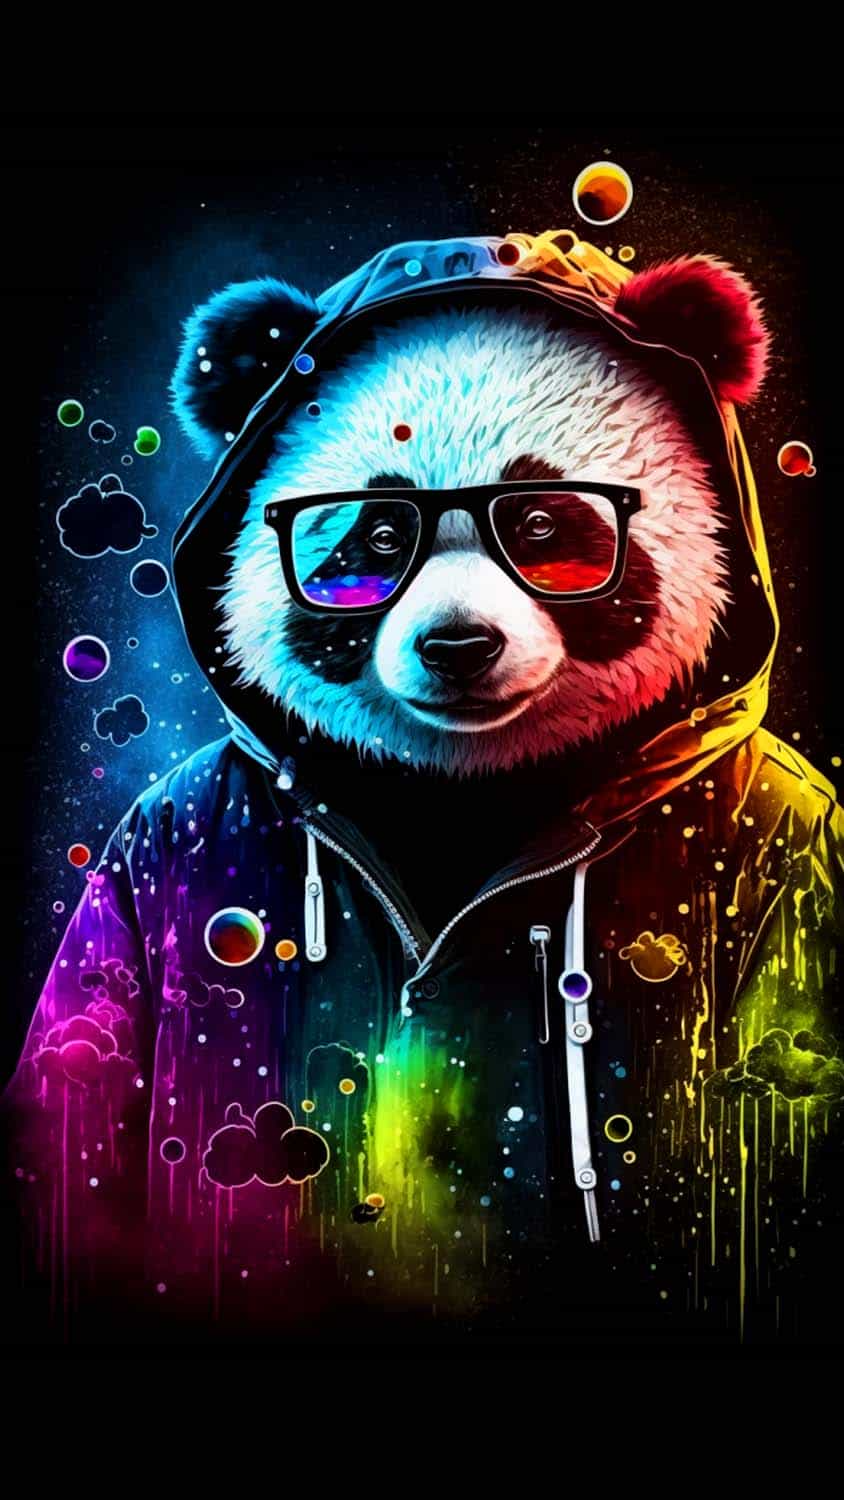 Download Panda wallpapers for mobile phone free Panda HD pictures